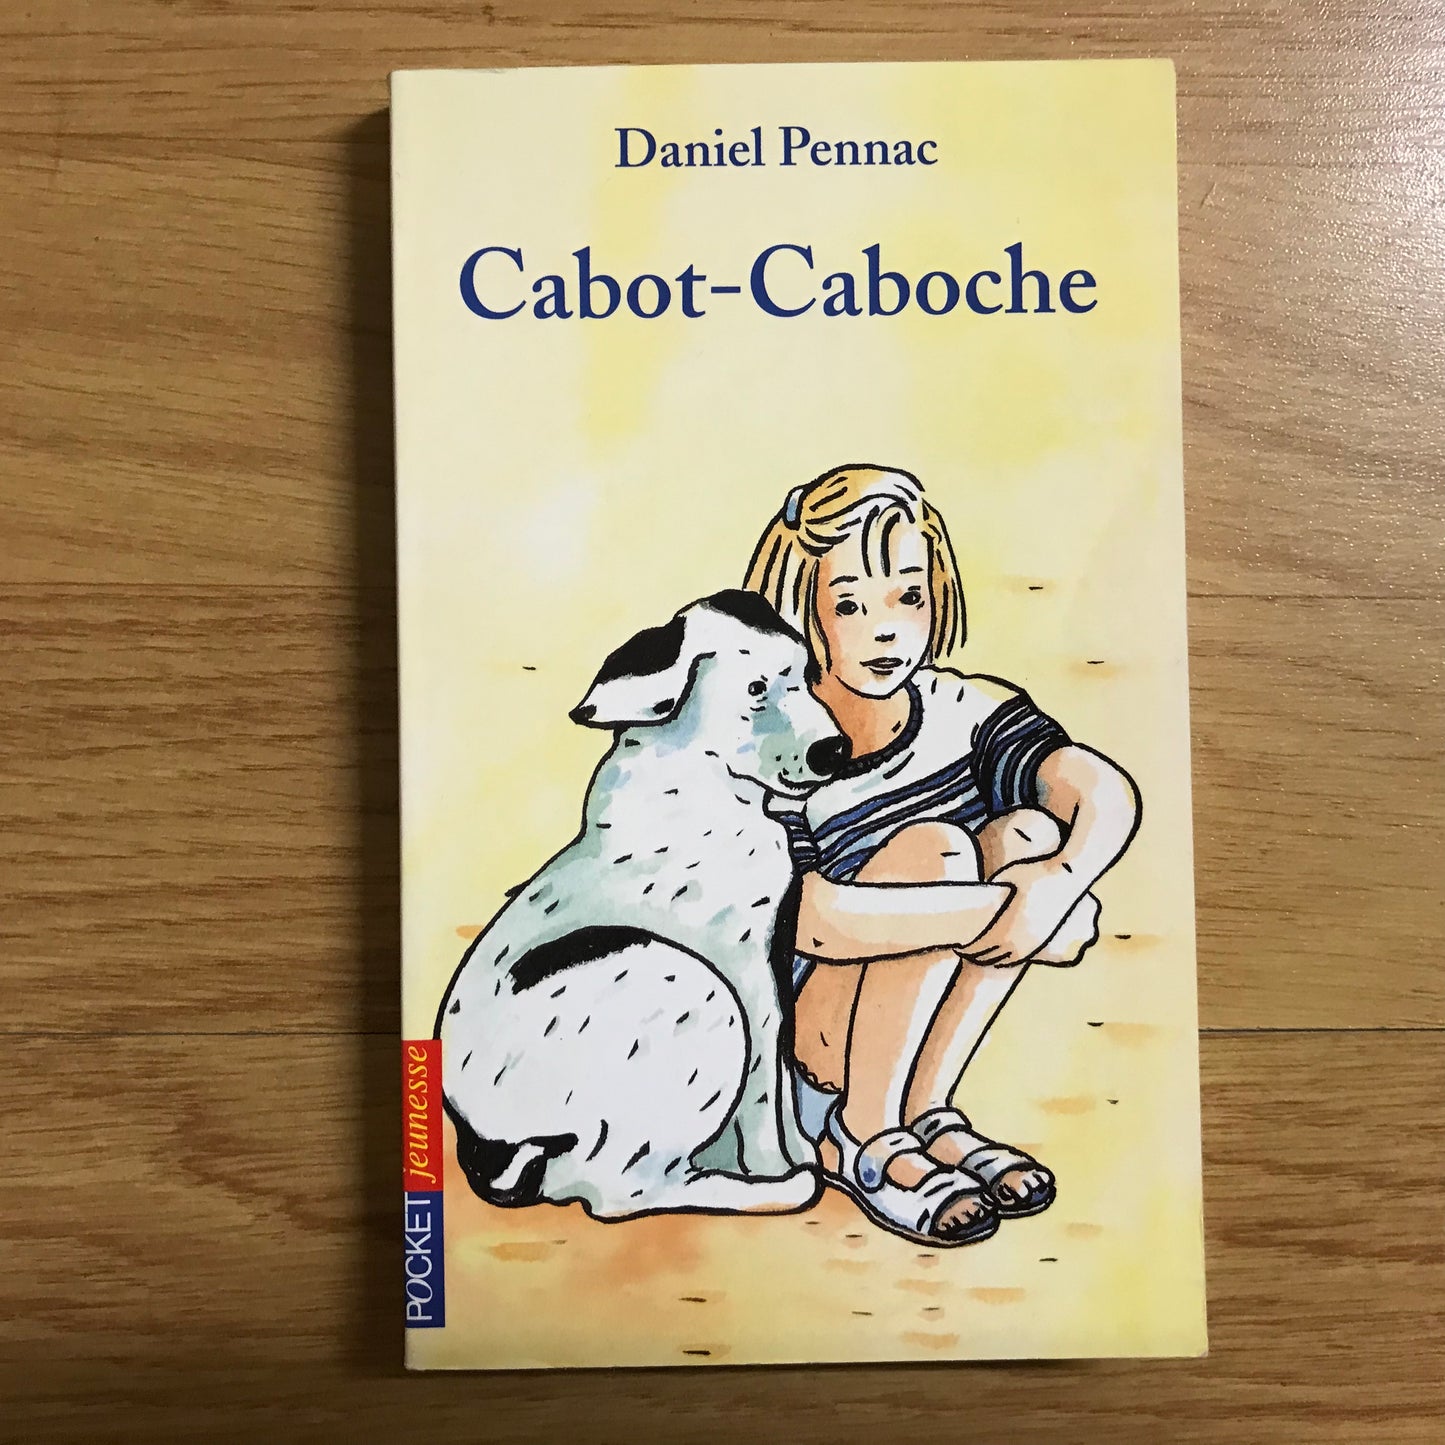 Pennac, Daniel - Cabot-Caboche